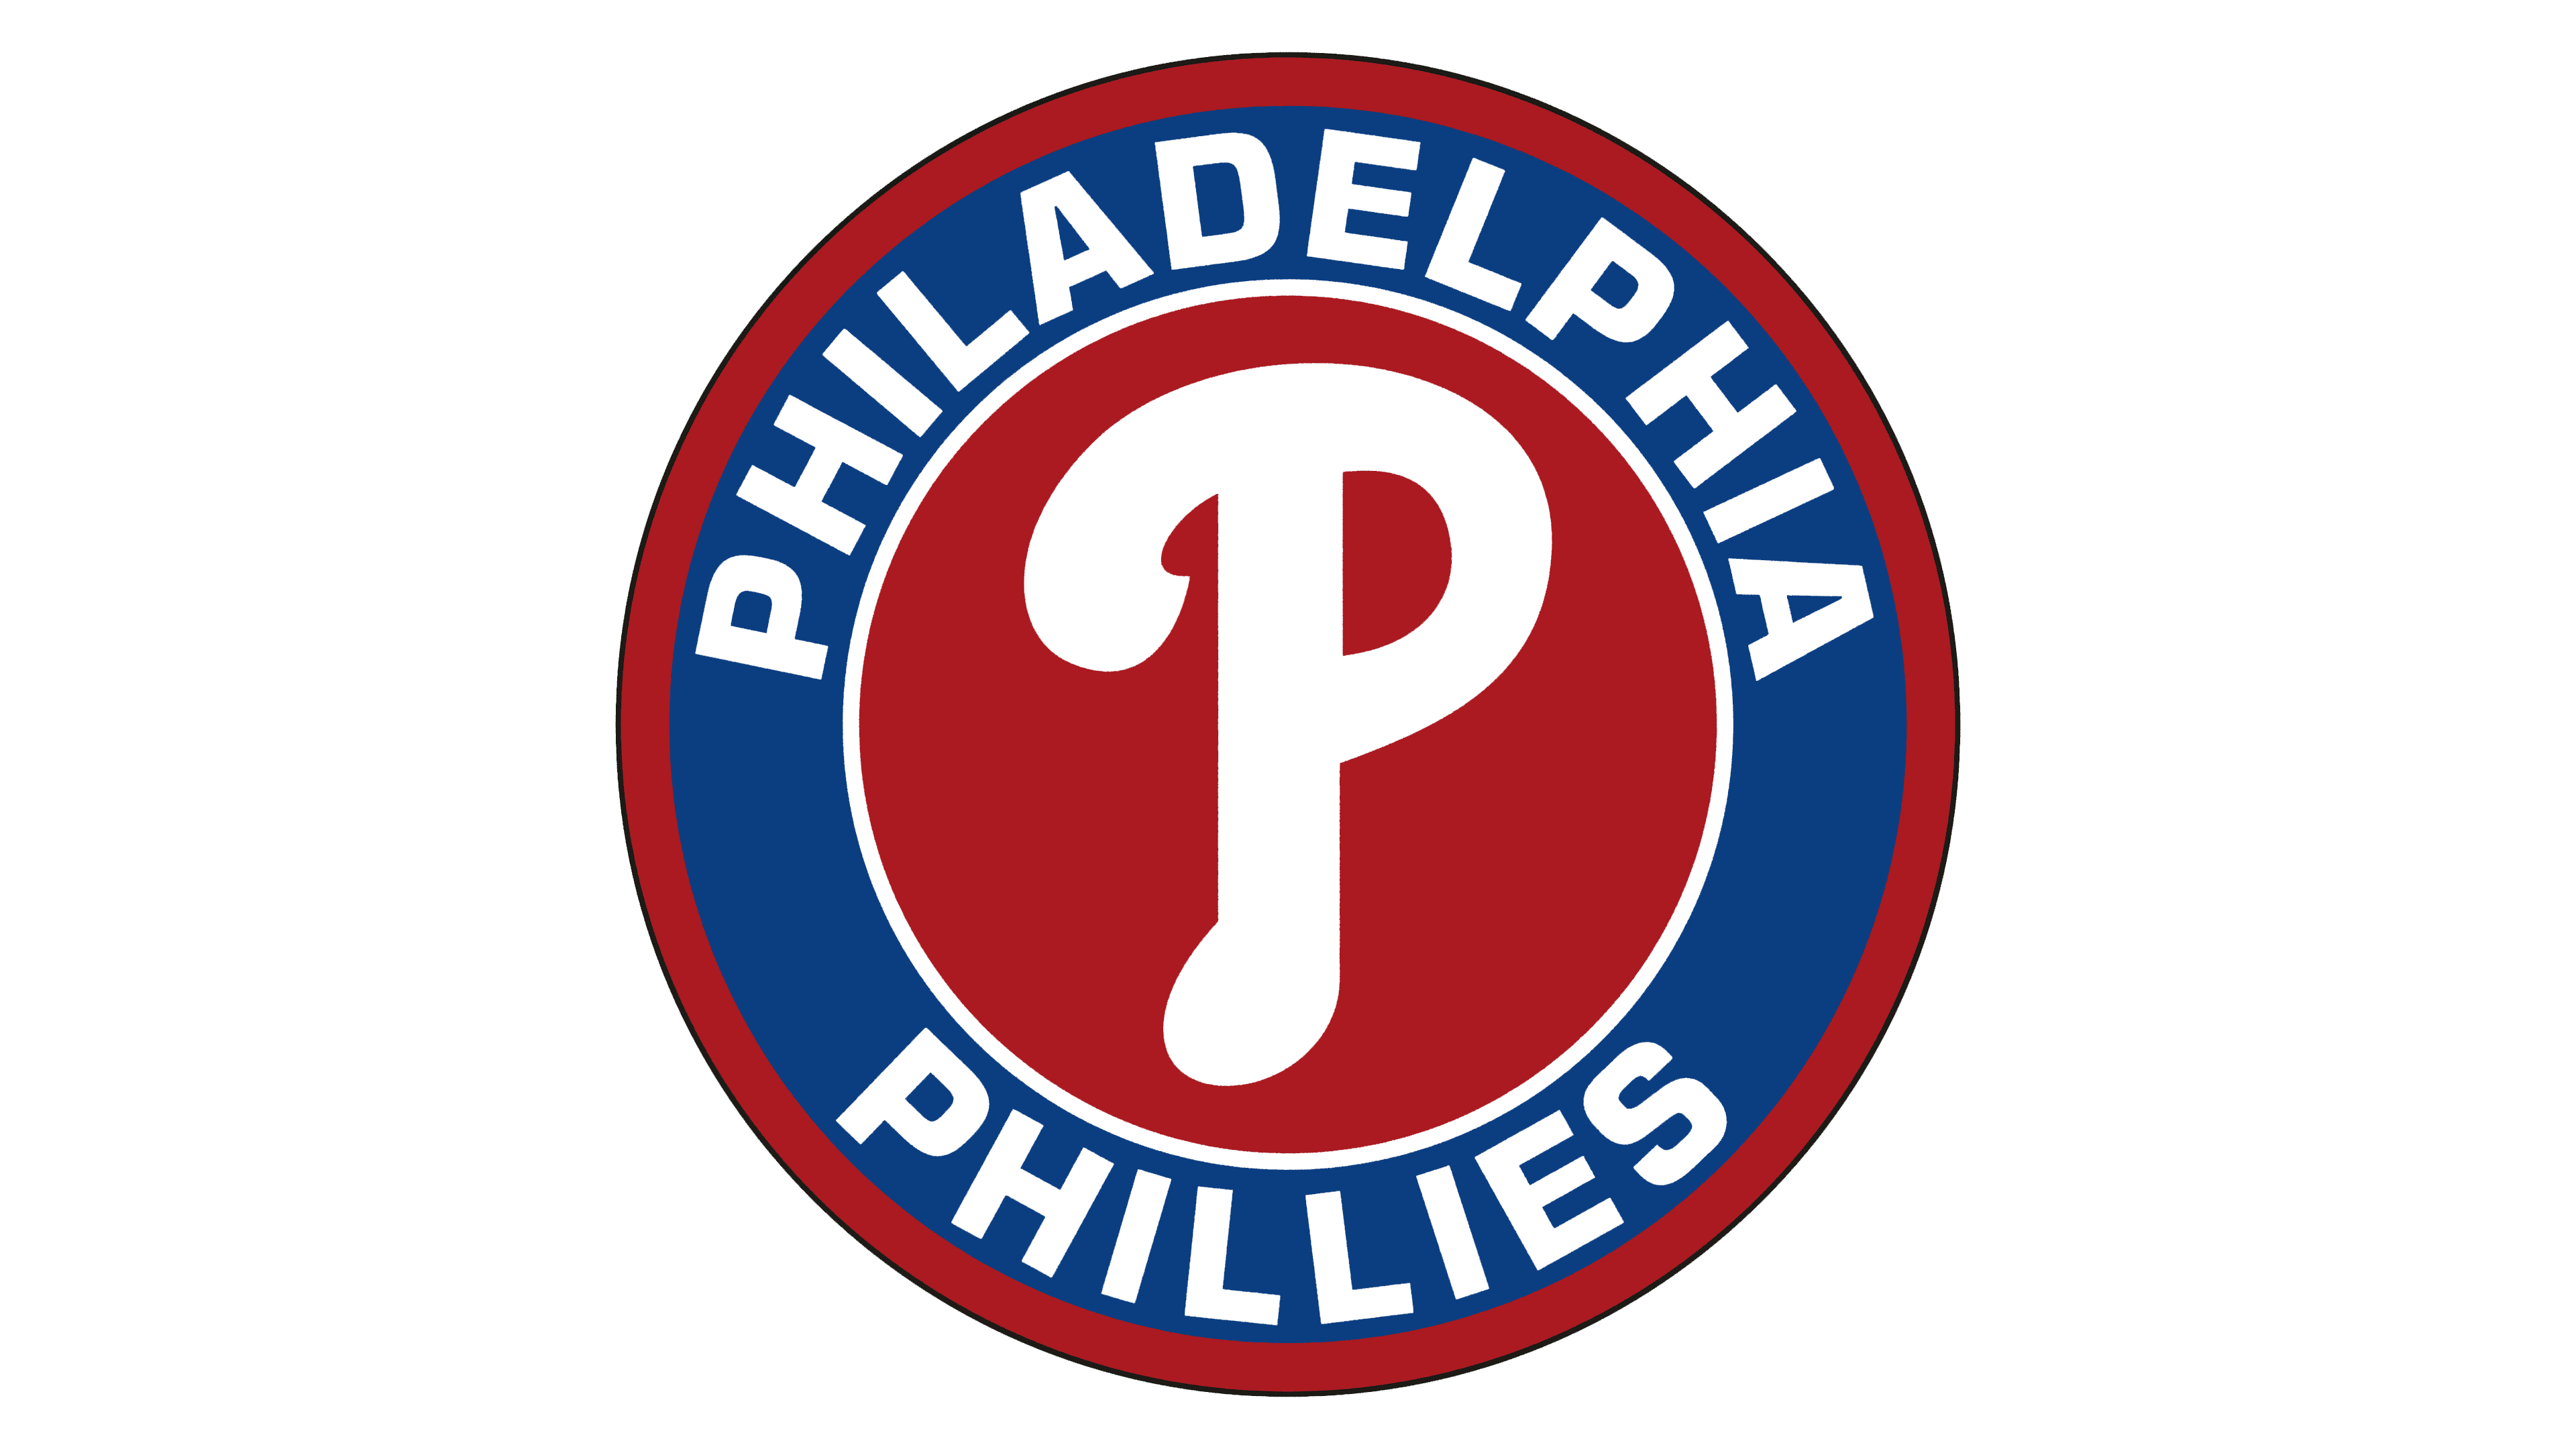 Philadelphia Phillies Logo History: All-Time 1900-Today